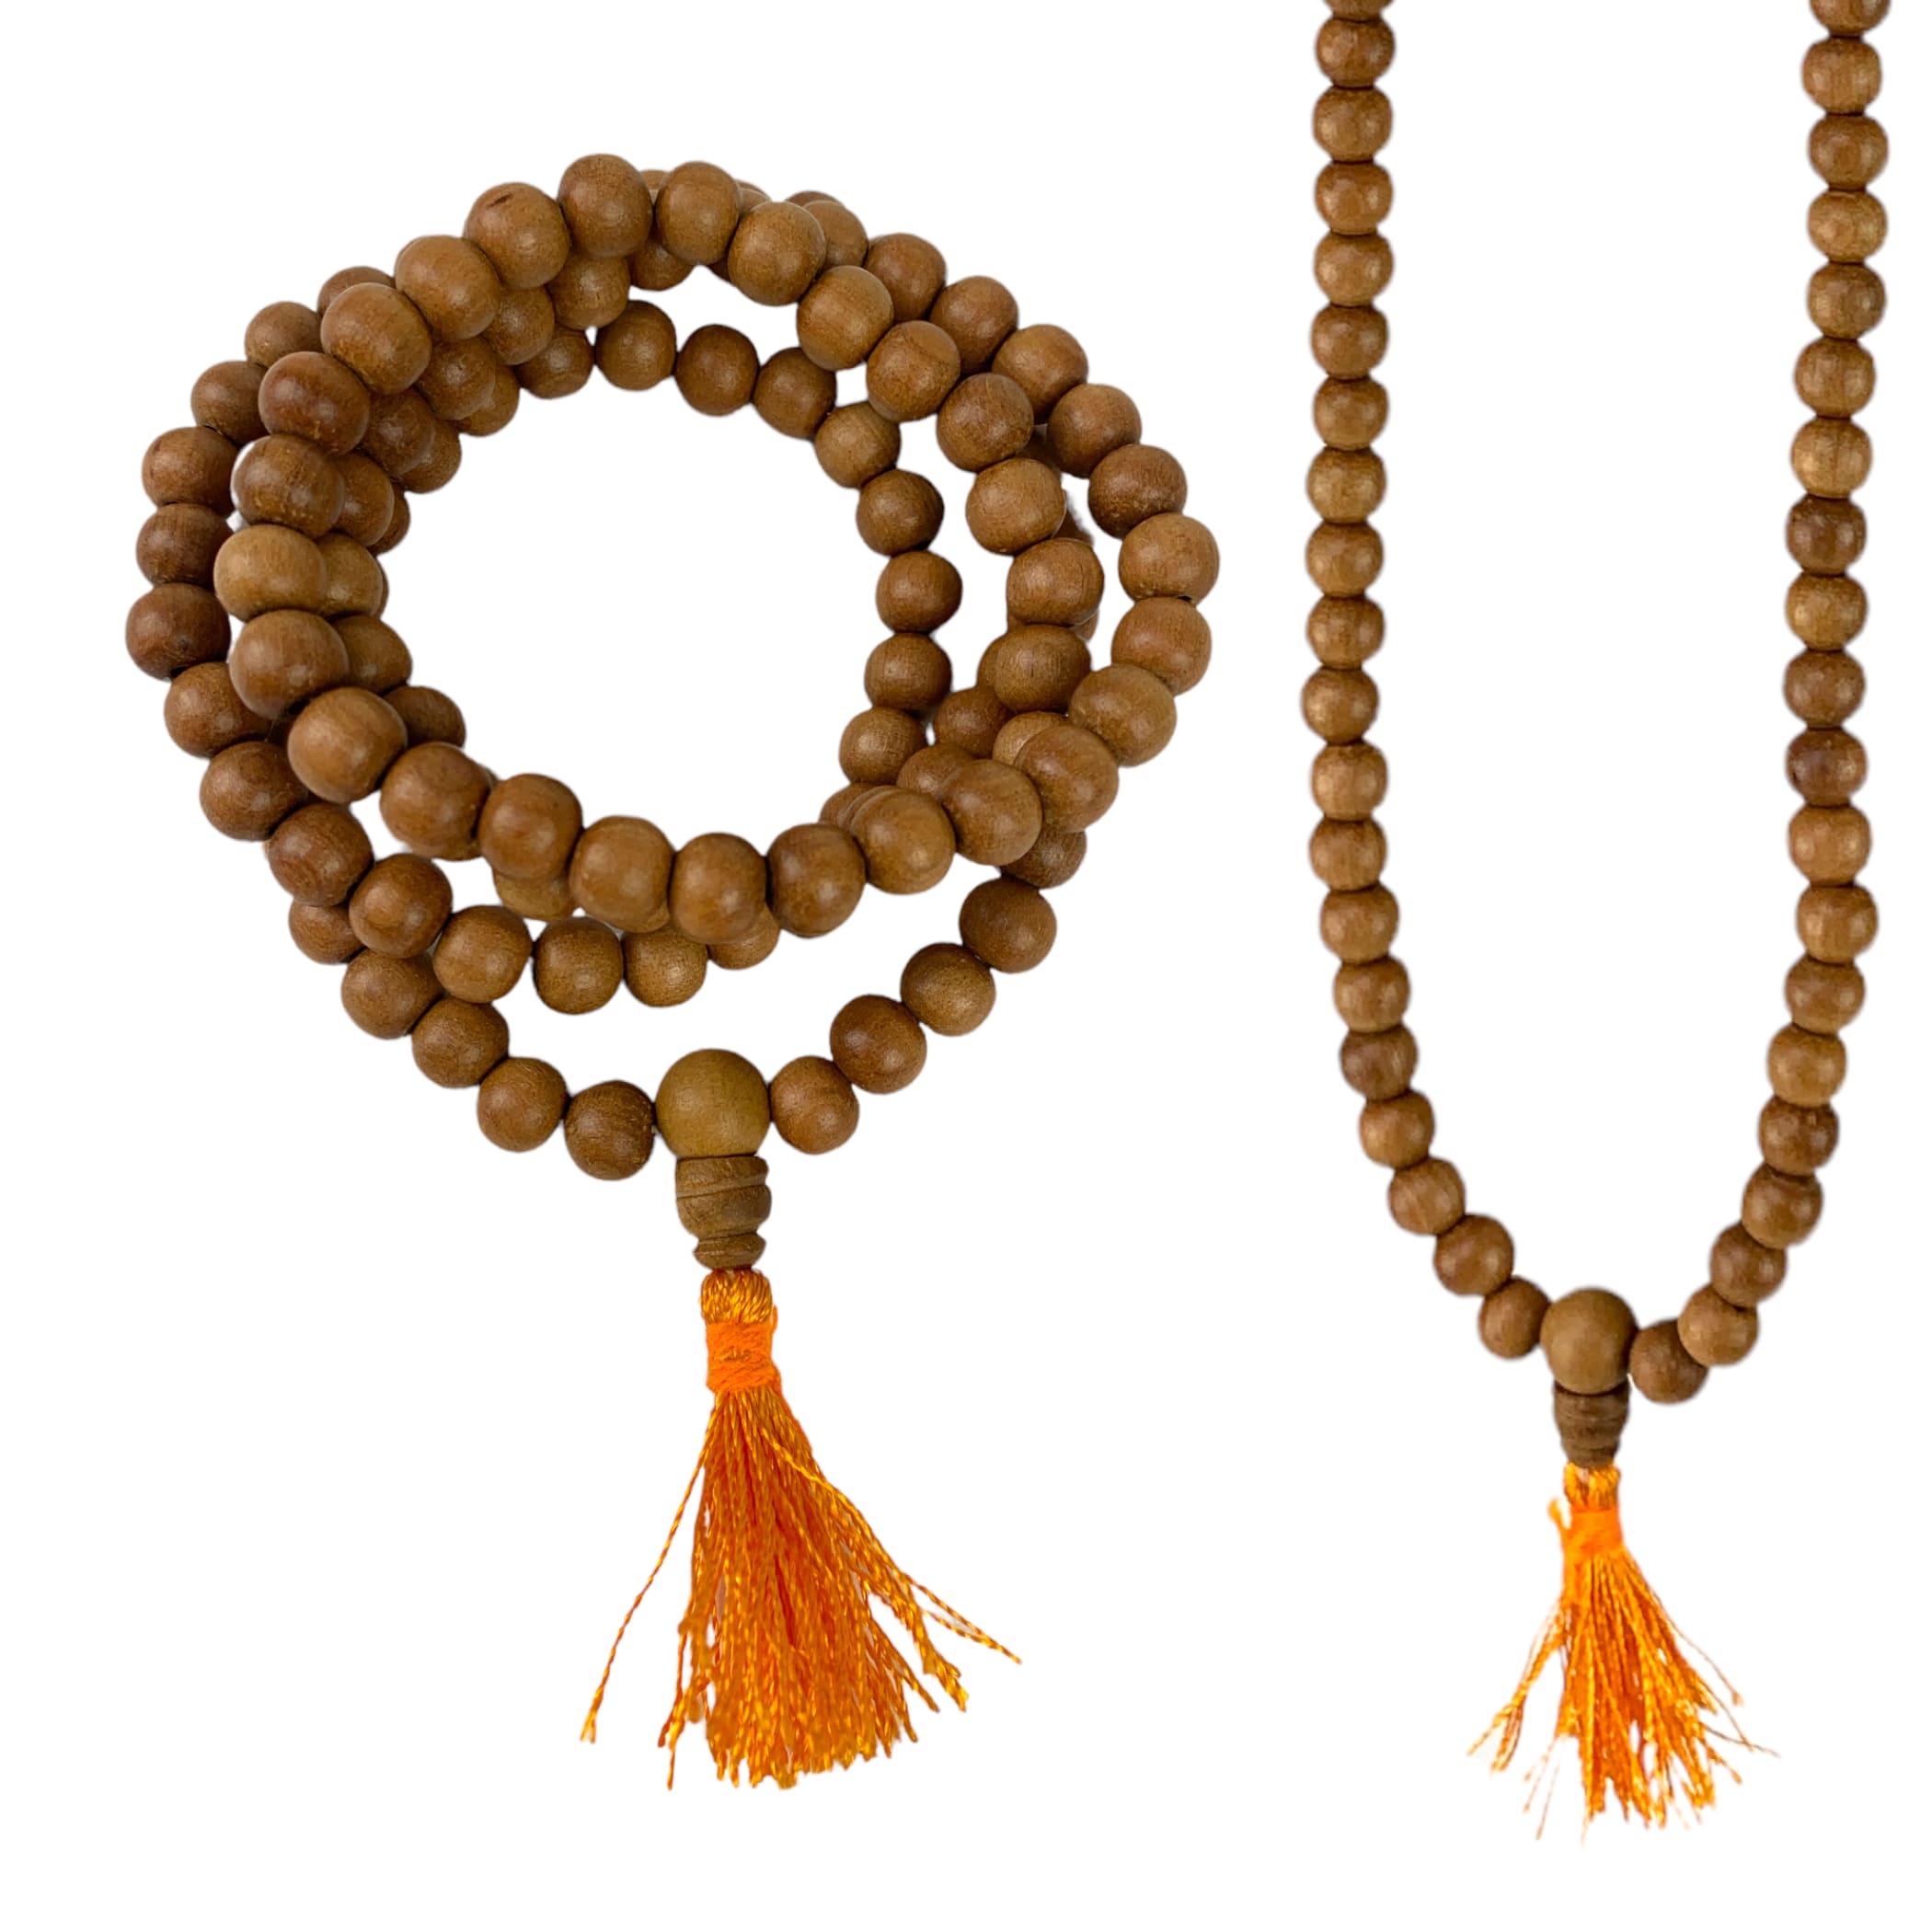 Buddhist or hindu accessories - prayer beads (Japa Mala), incense